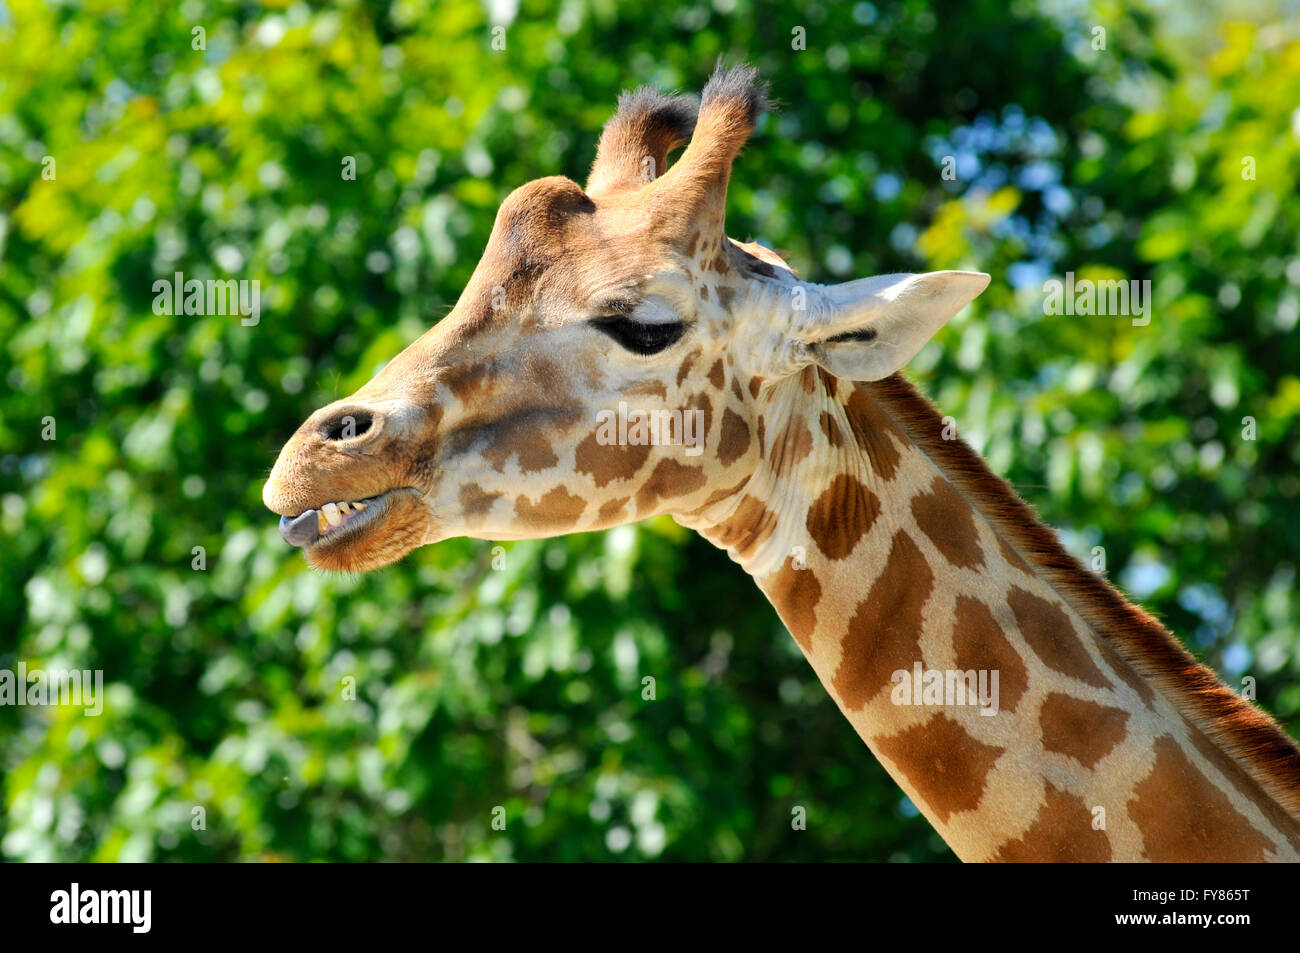 Profile portrait of a giraffe (Giraffa camelopardalis)  showing its teeth on green foliage background Stock Photo